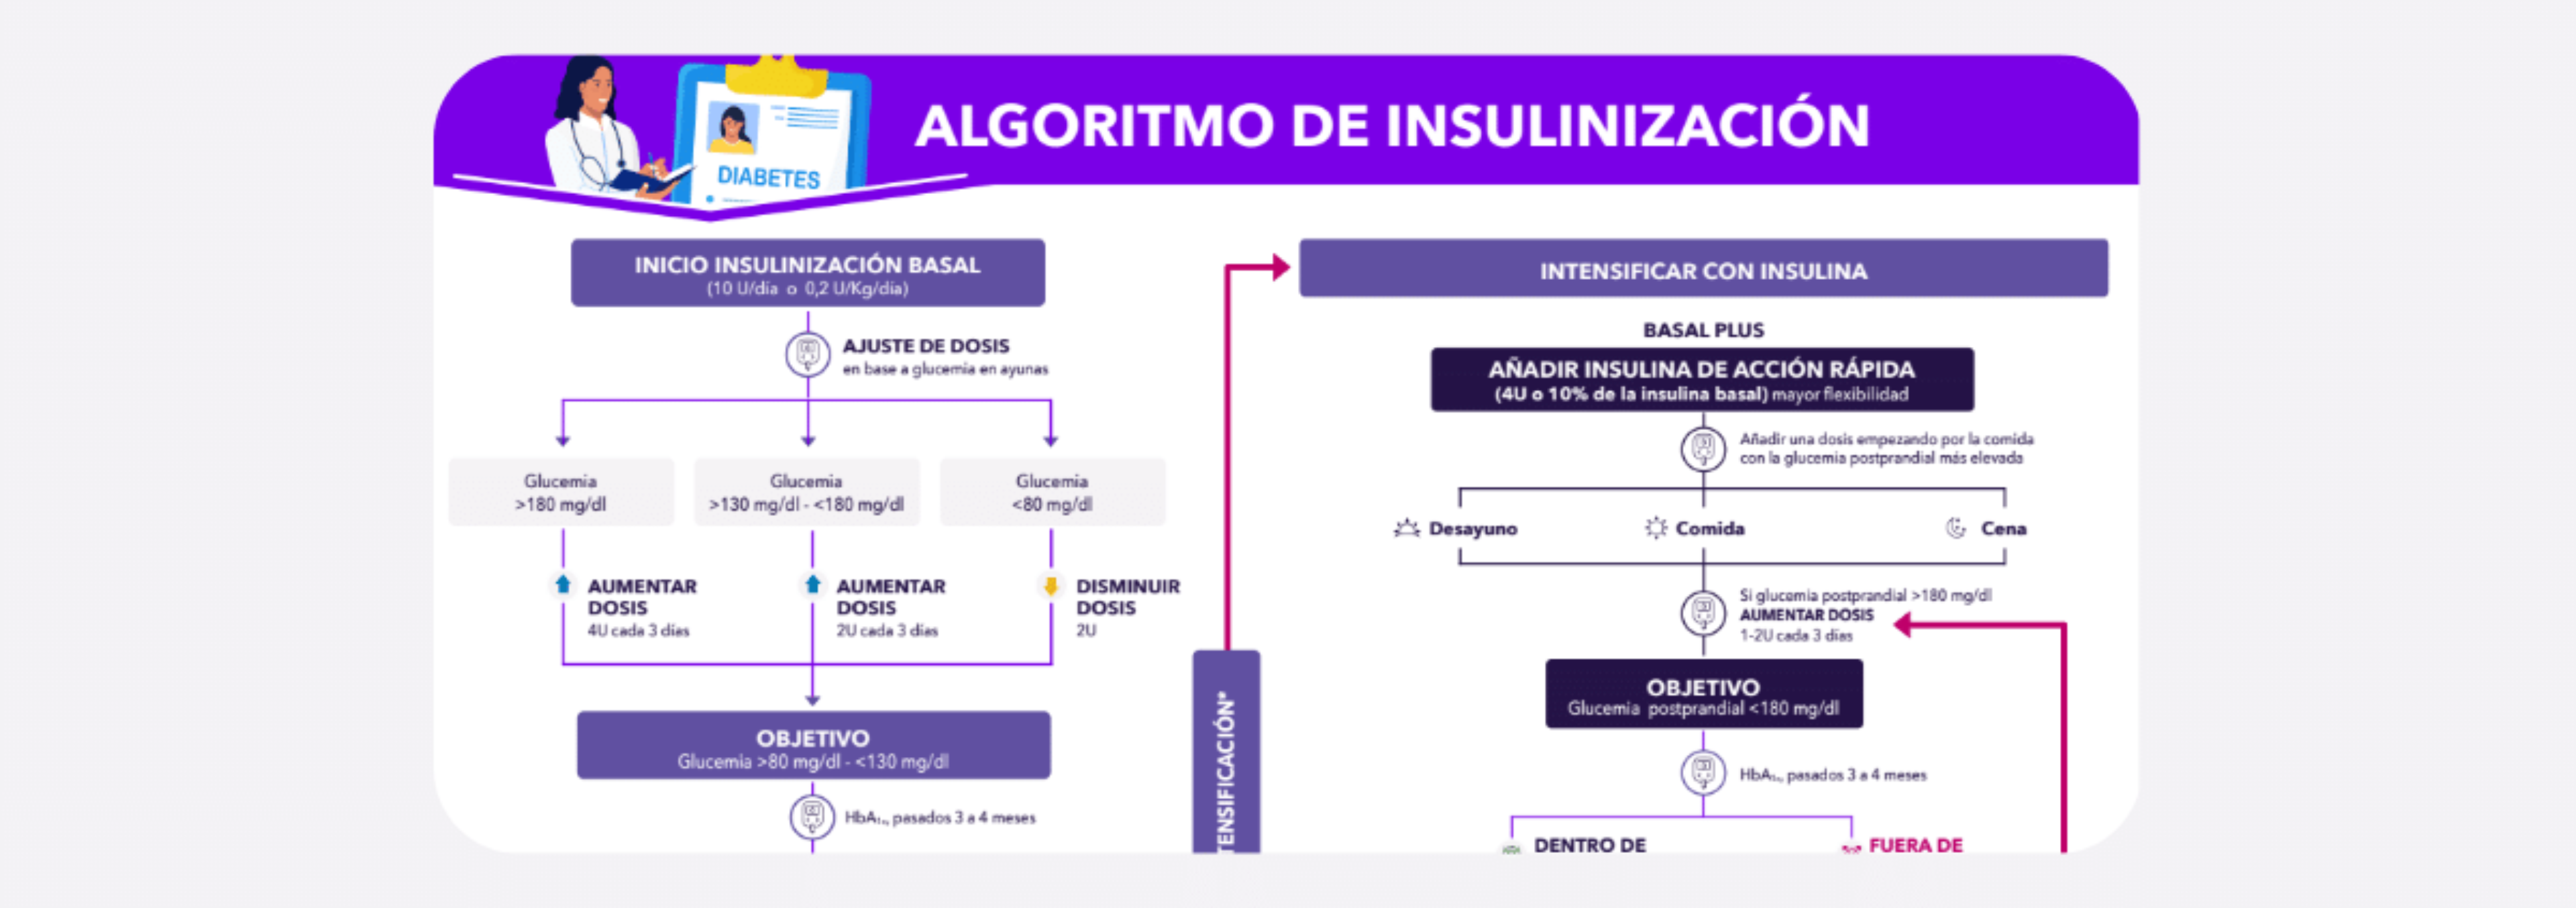 Algoritmo de insulinización e intensificación